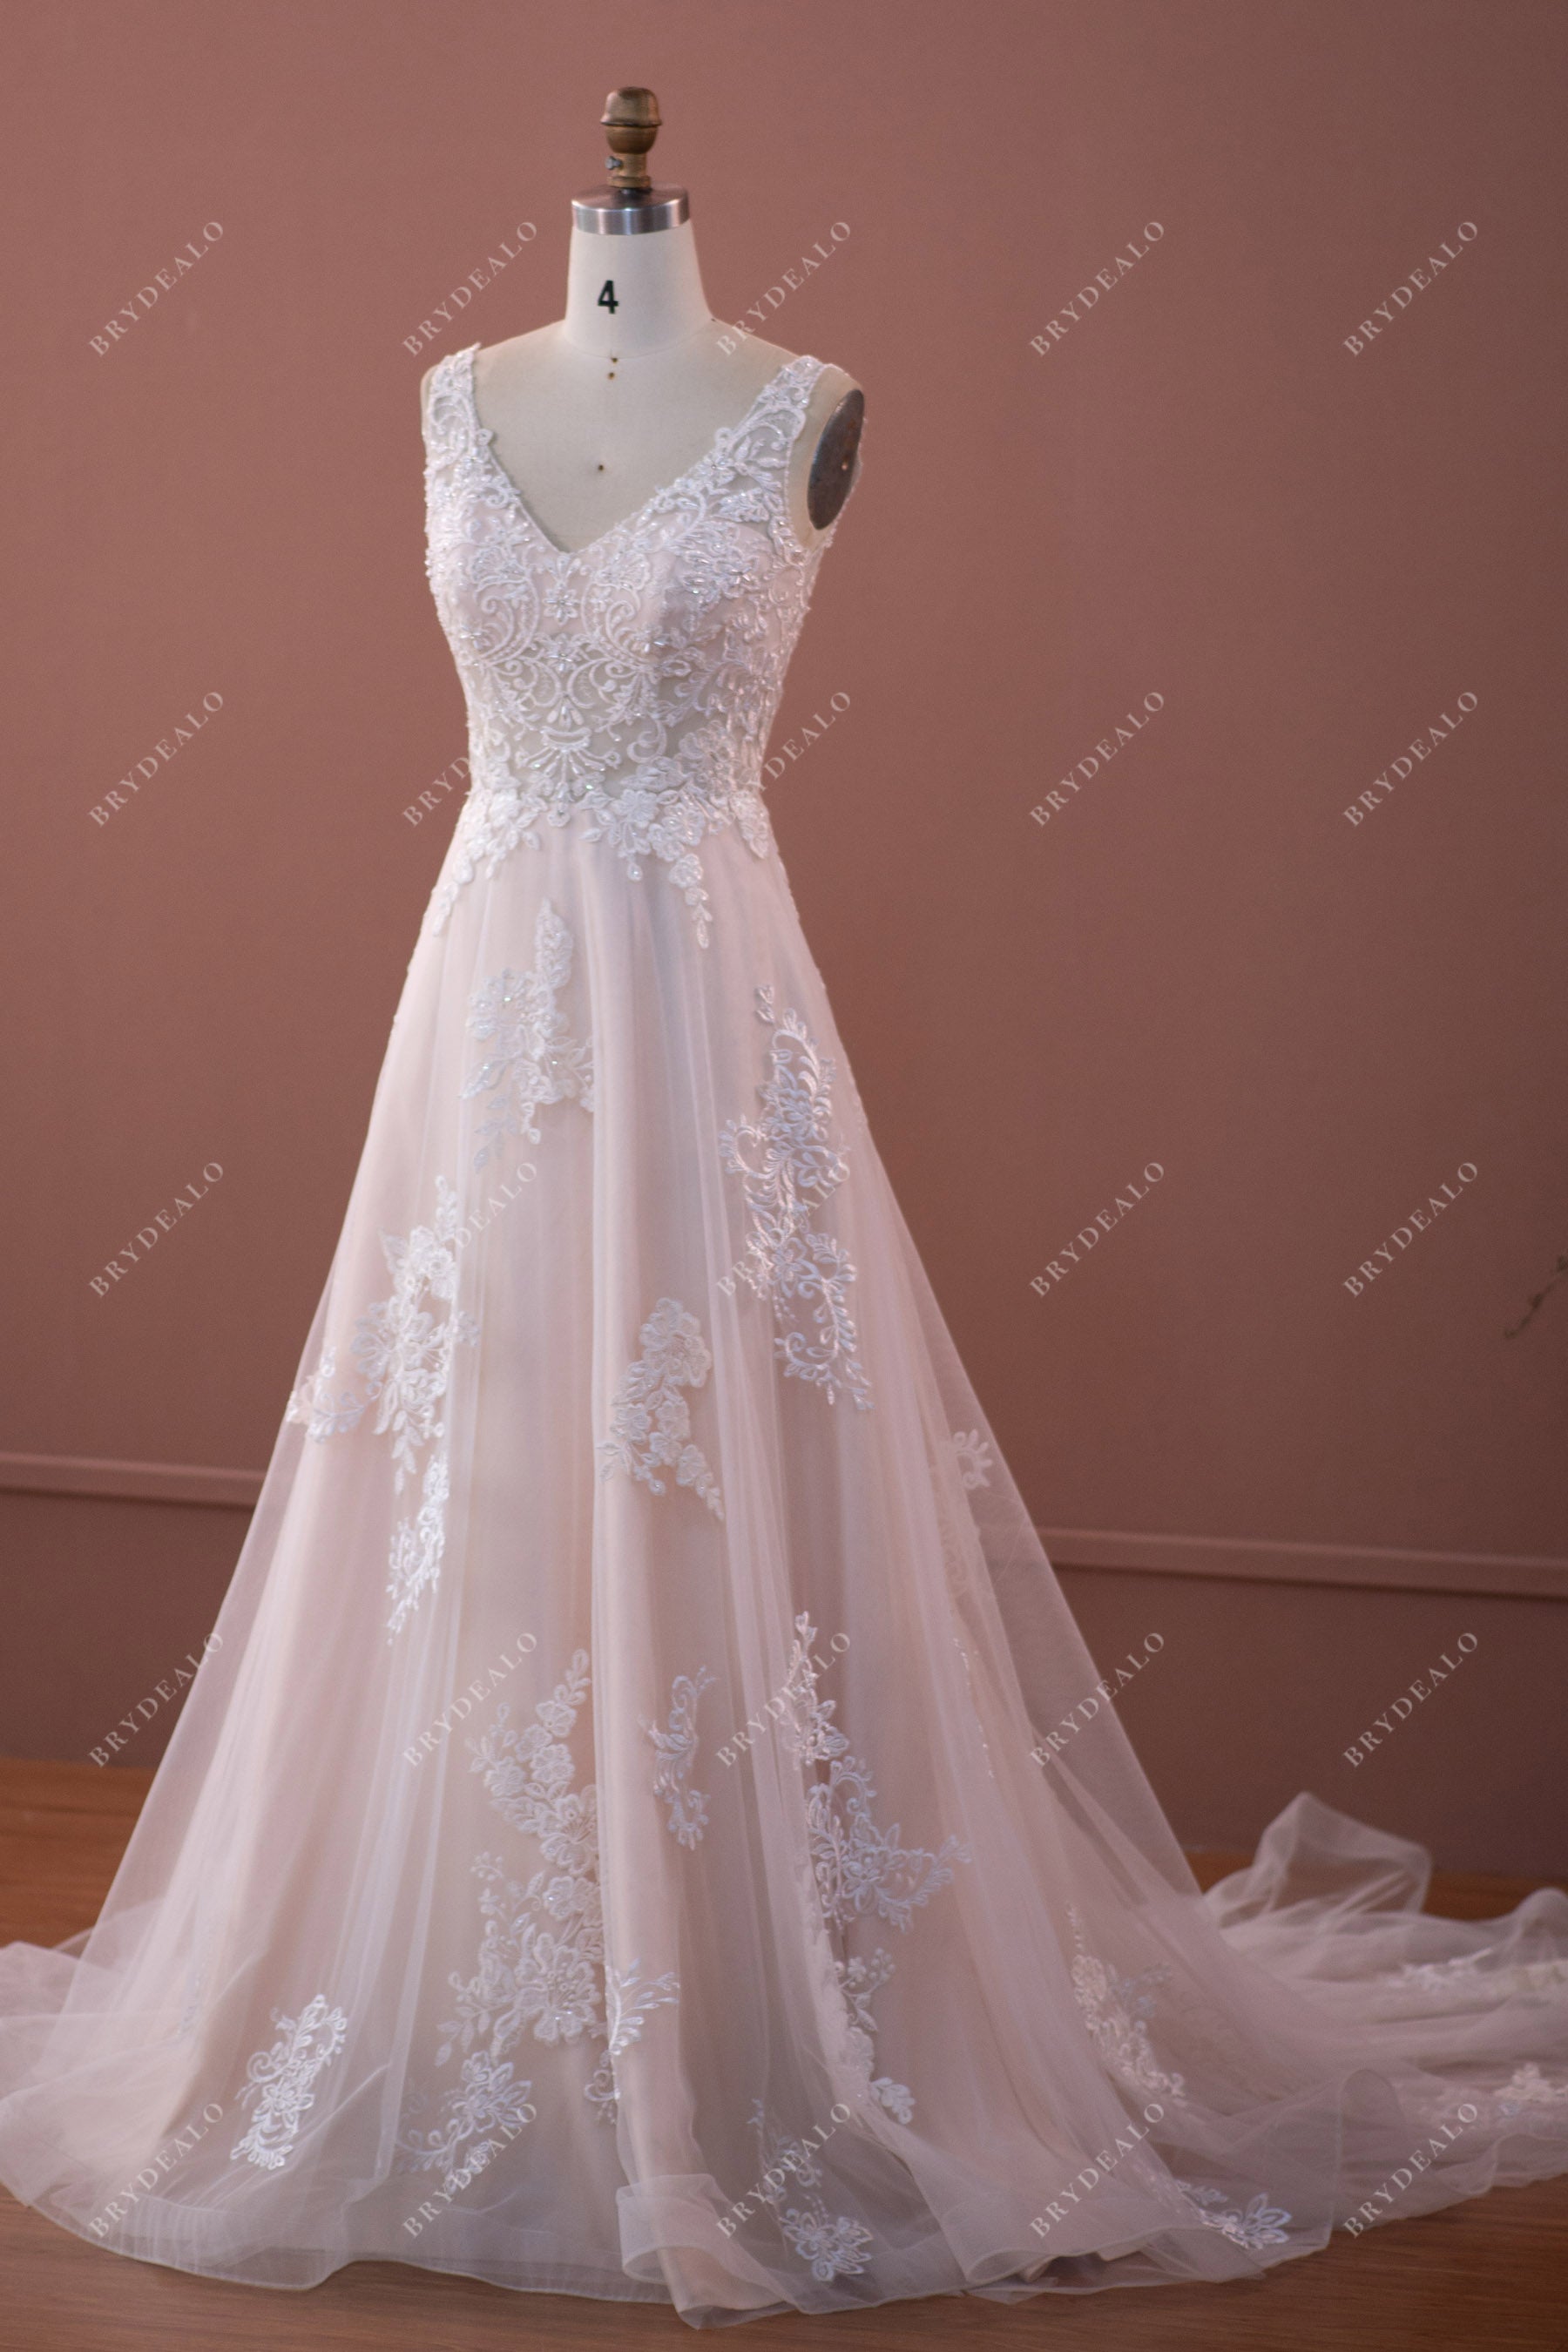 Beaded Lace Ruffled A-line Wedding Dress Sample